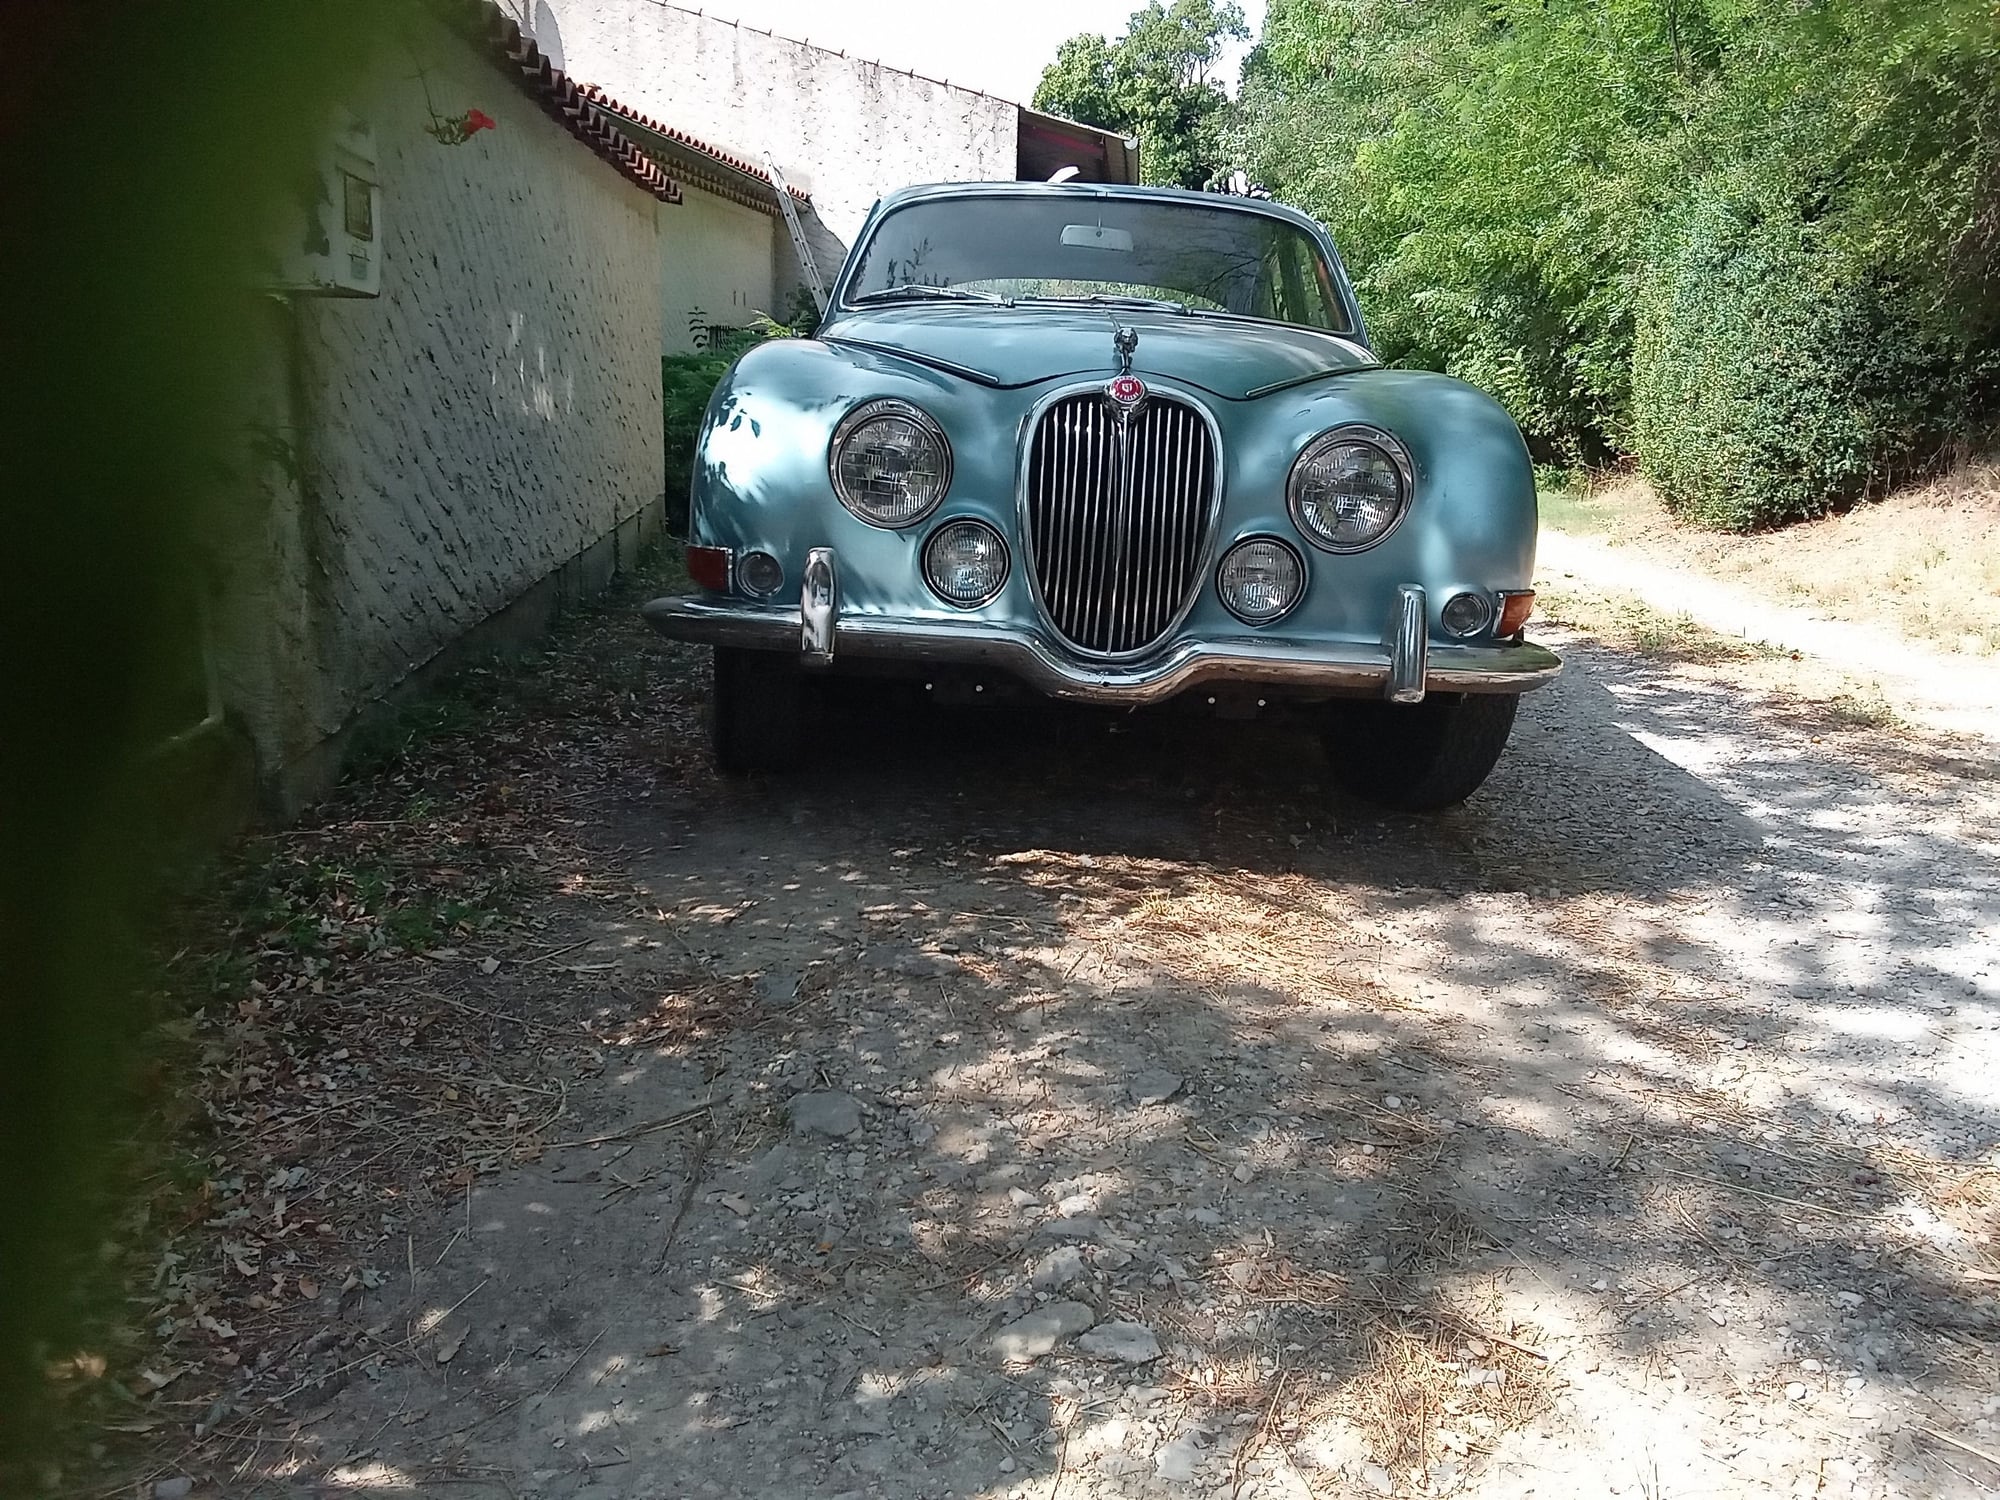 1966 Jaguar 3.4 - Jaguar S type 1966 - Used - VIN 1B5293DN - 68,168 Miles - 6 cyl - 2WD - Manual - Sedan - Blue - Divajeu (26), France